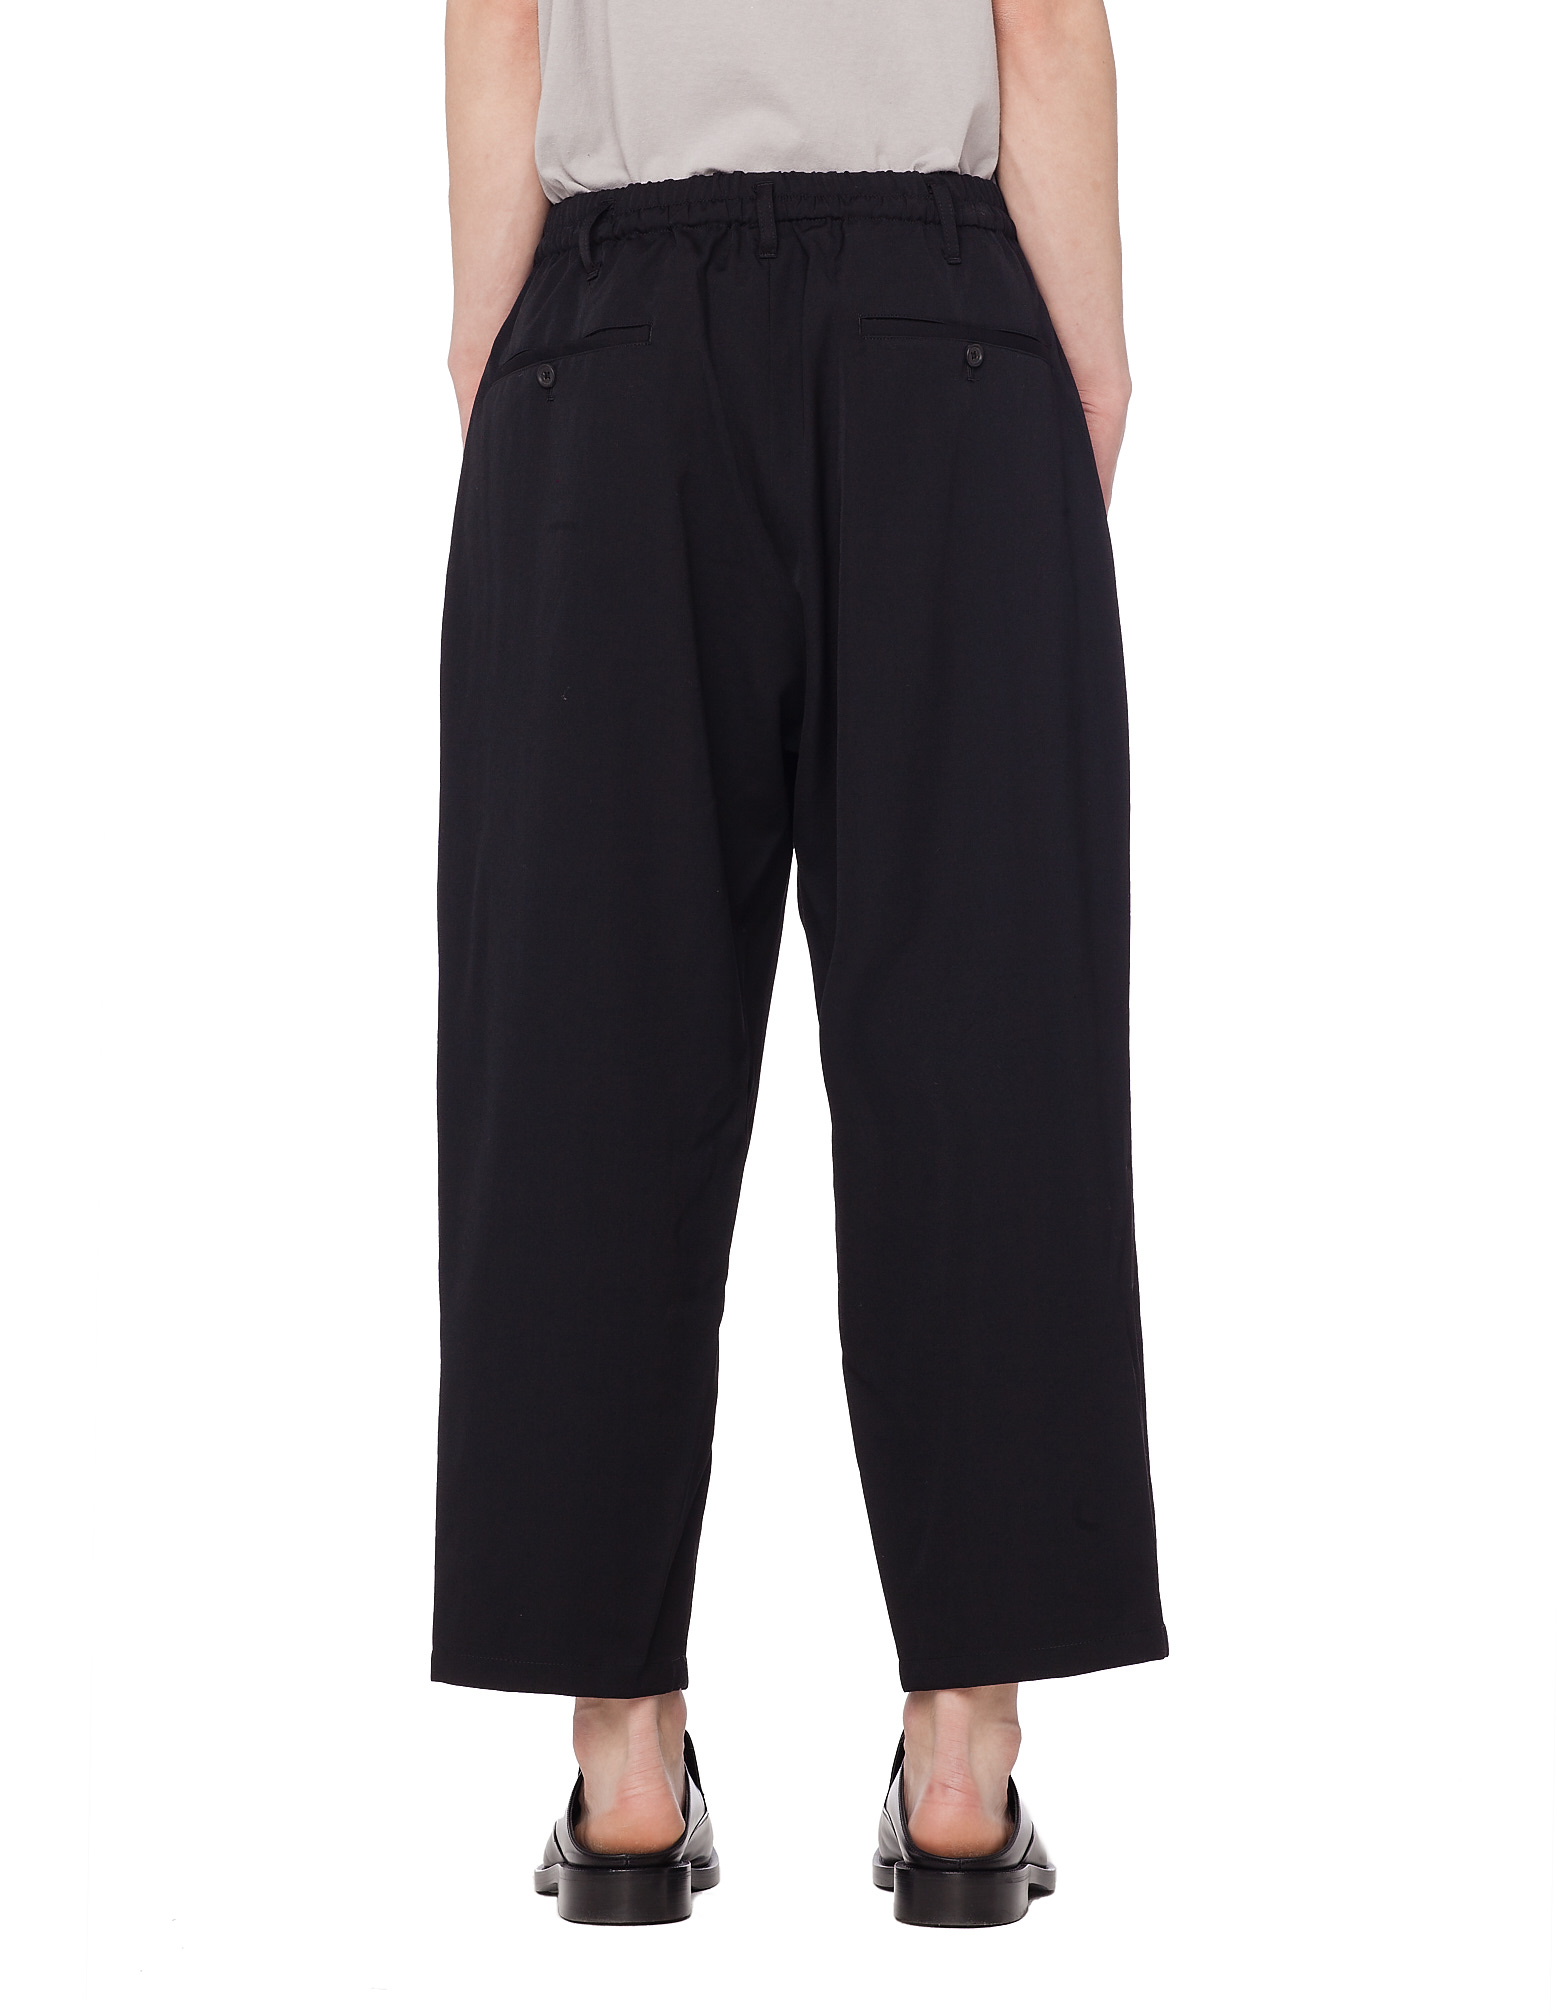 Buy Yohji Yamamoto men black rayon trousers for $530 online on SVMOSCOW